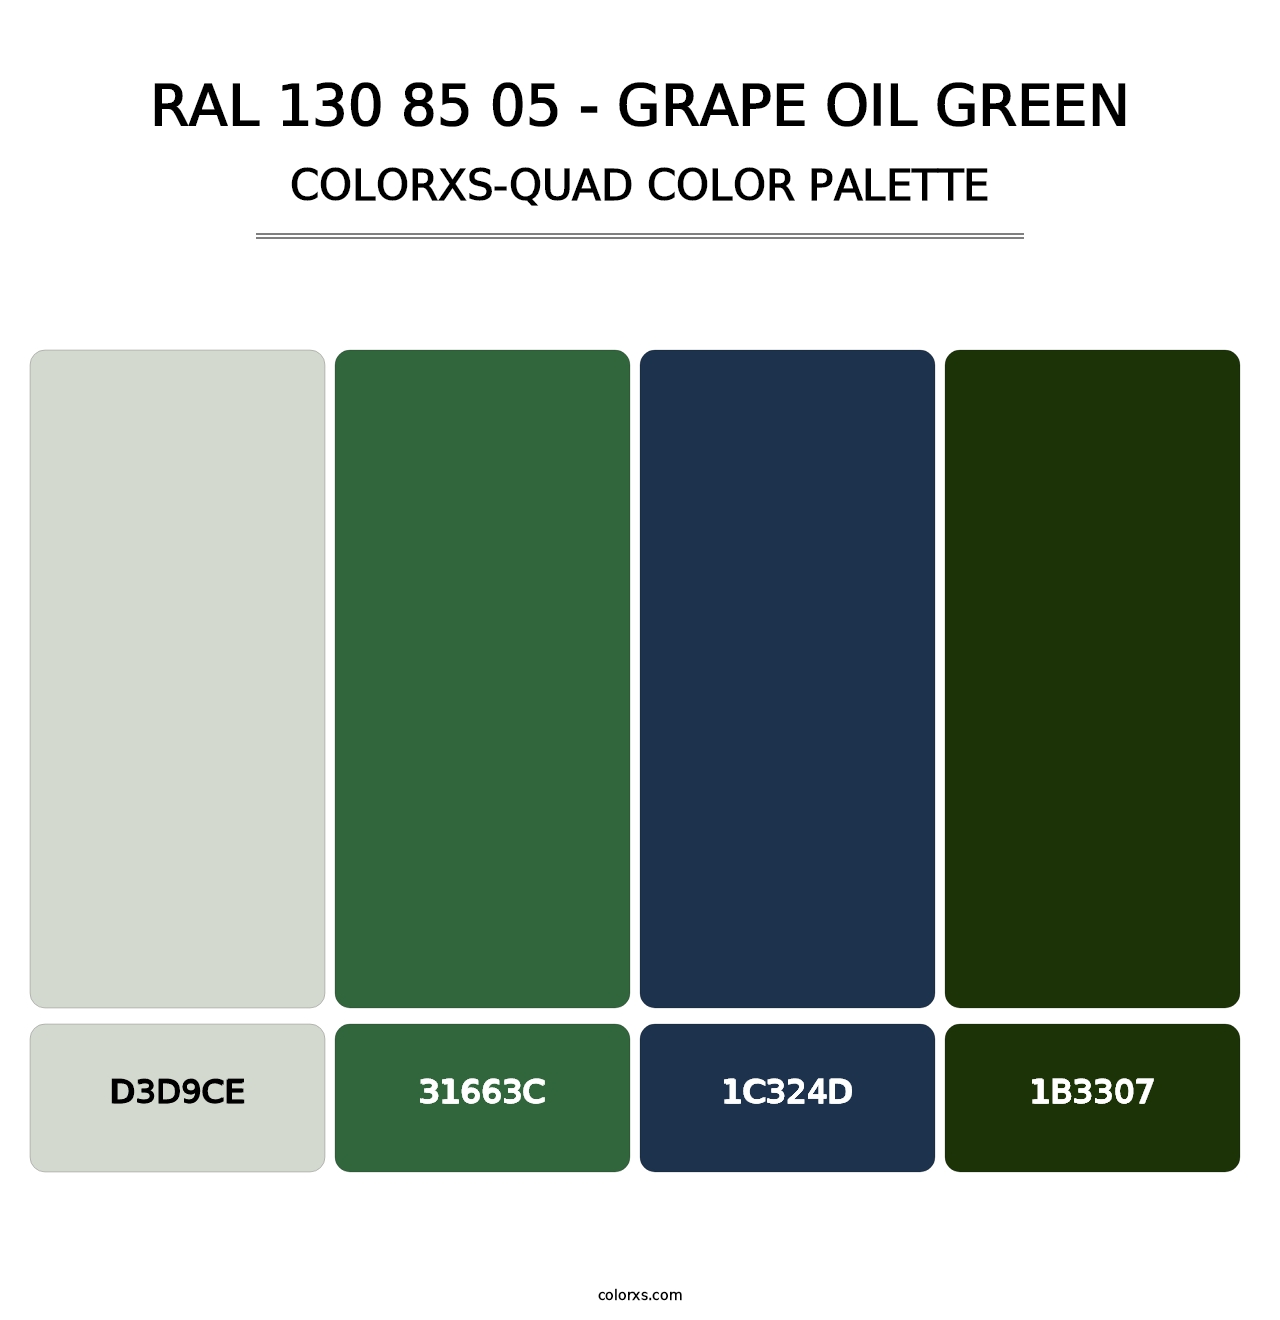 RAL 130 85 05 - Grape Oil Green - Colorxs Quad Palette